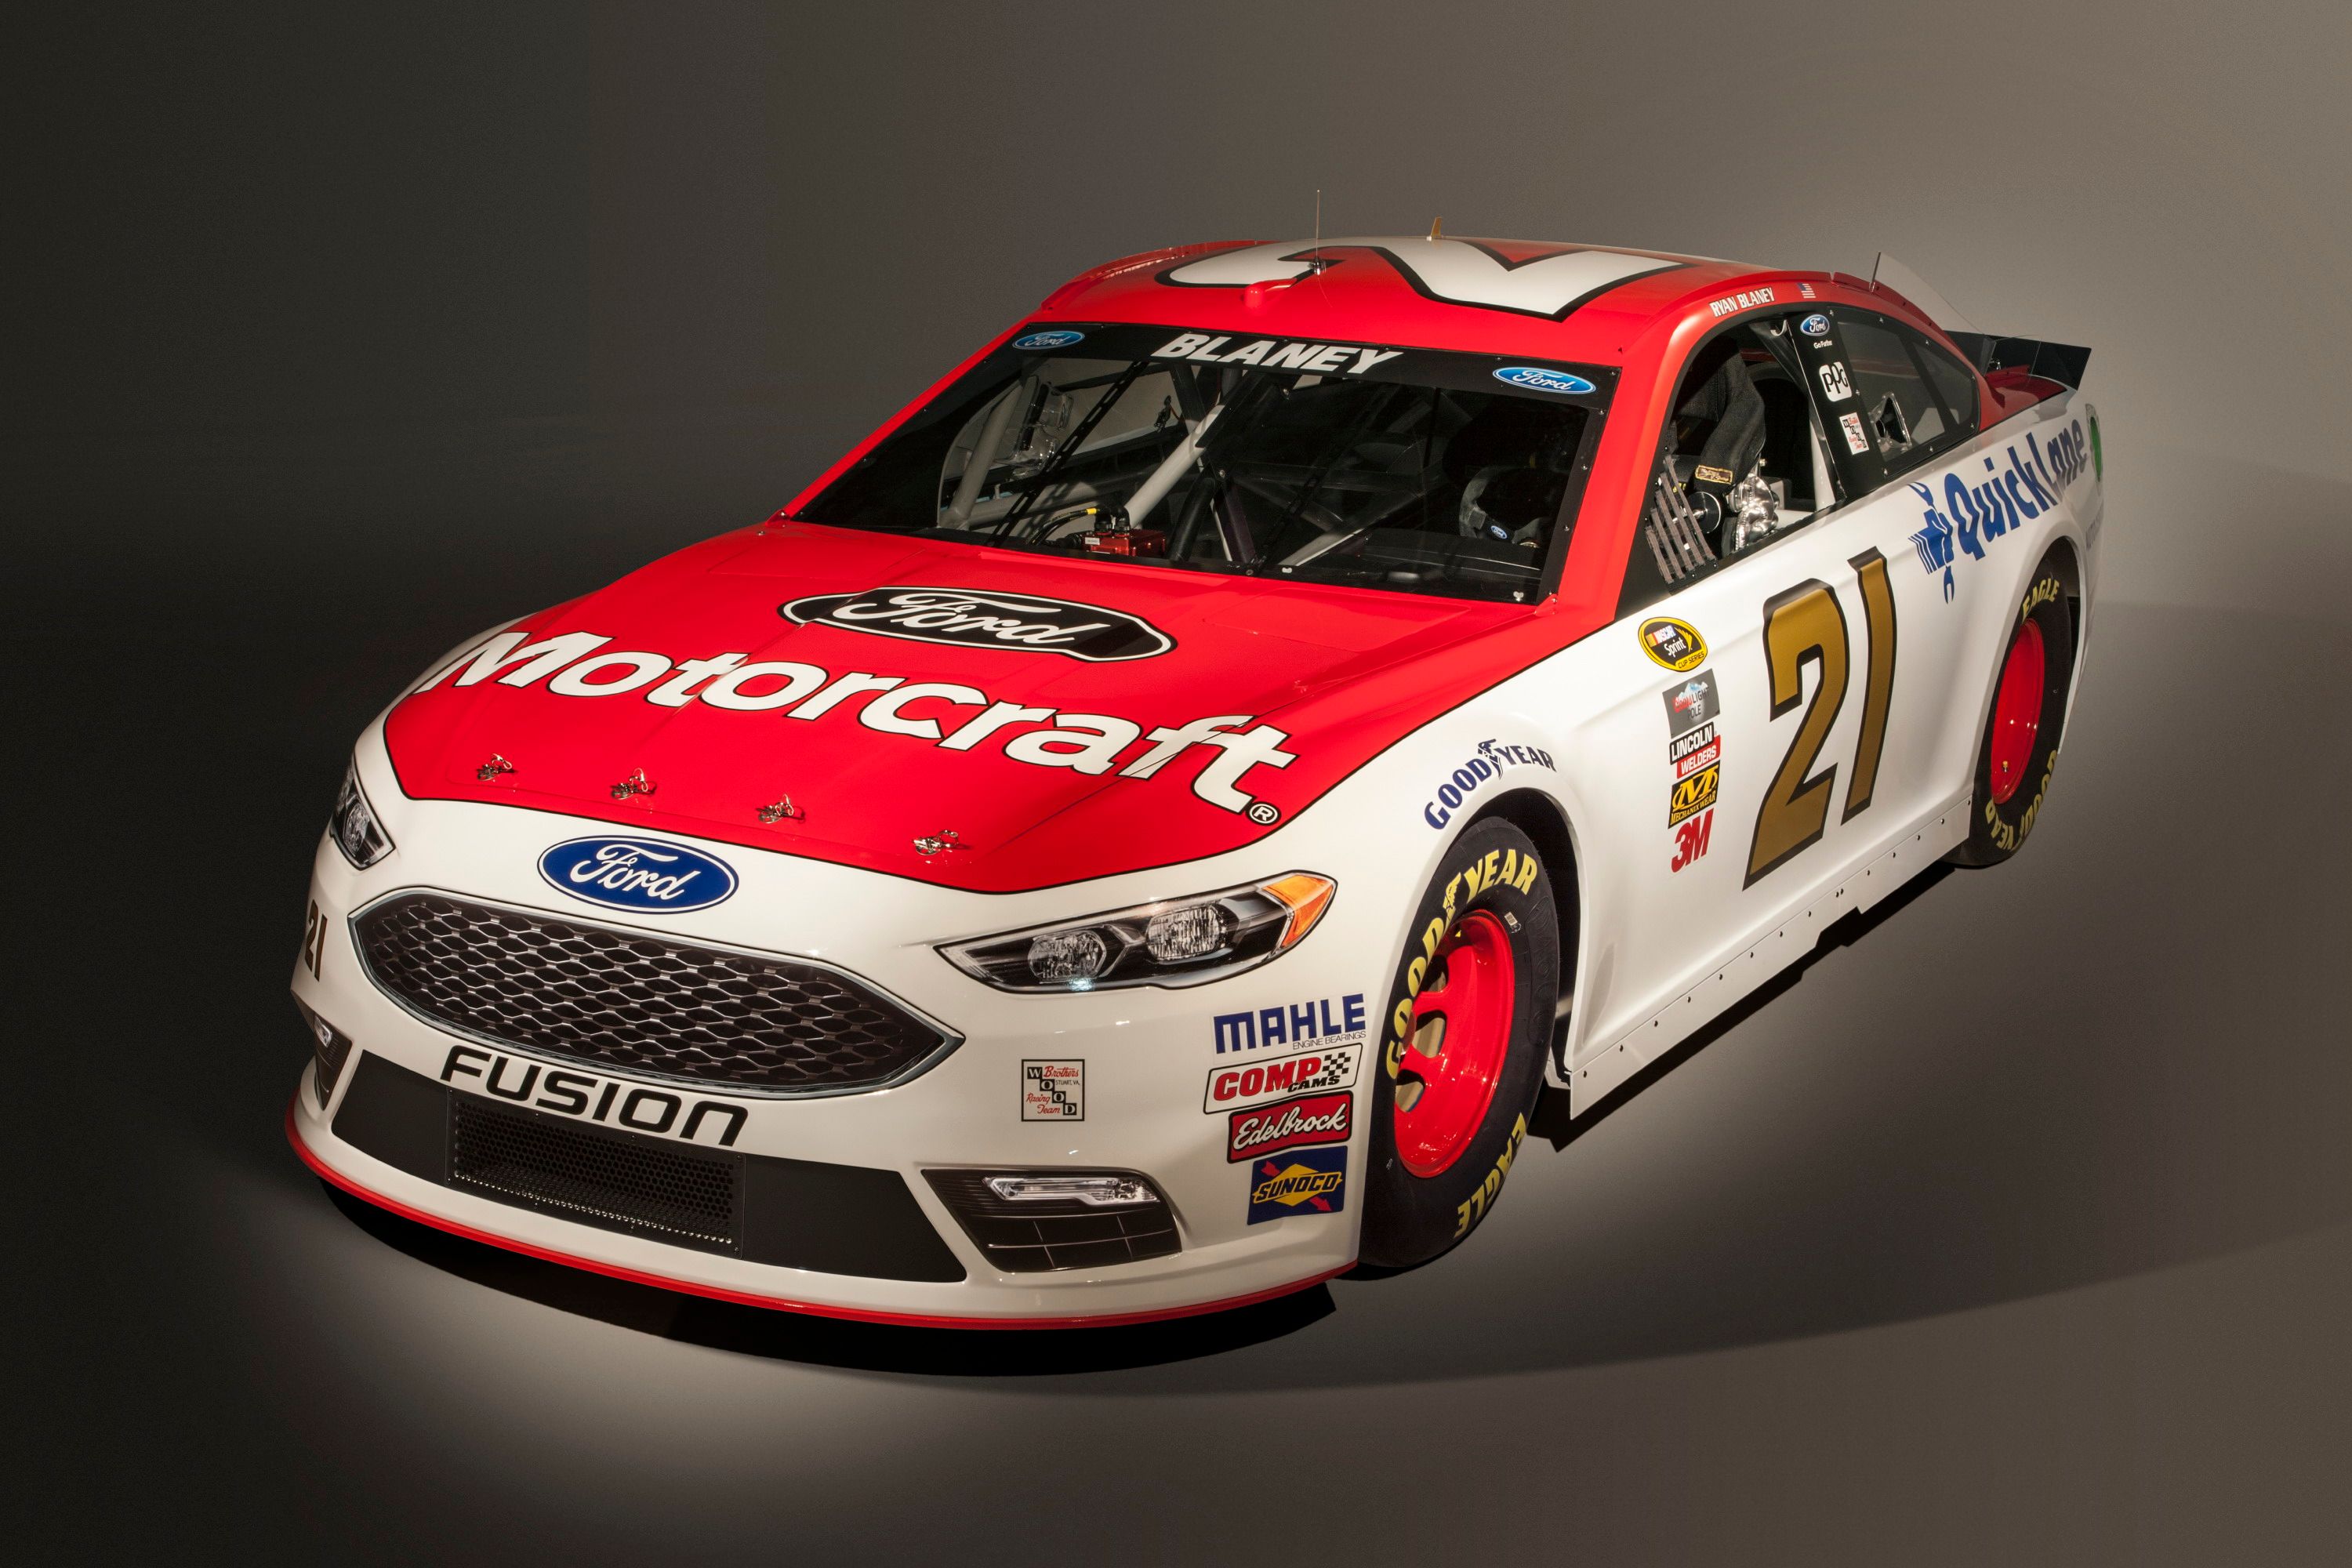 2016 Ford Fusion NASCAR